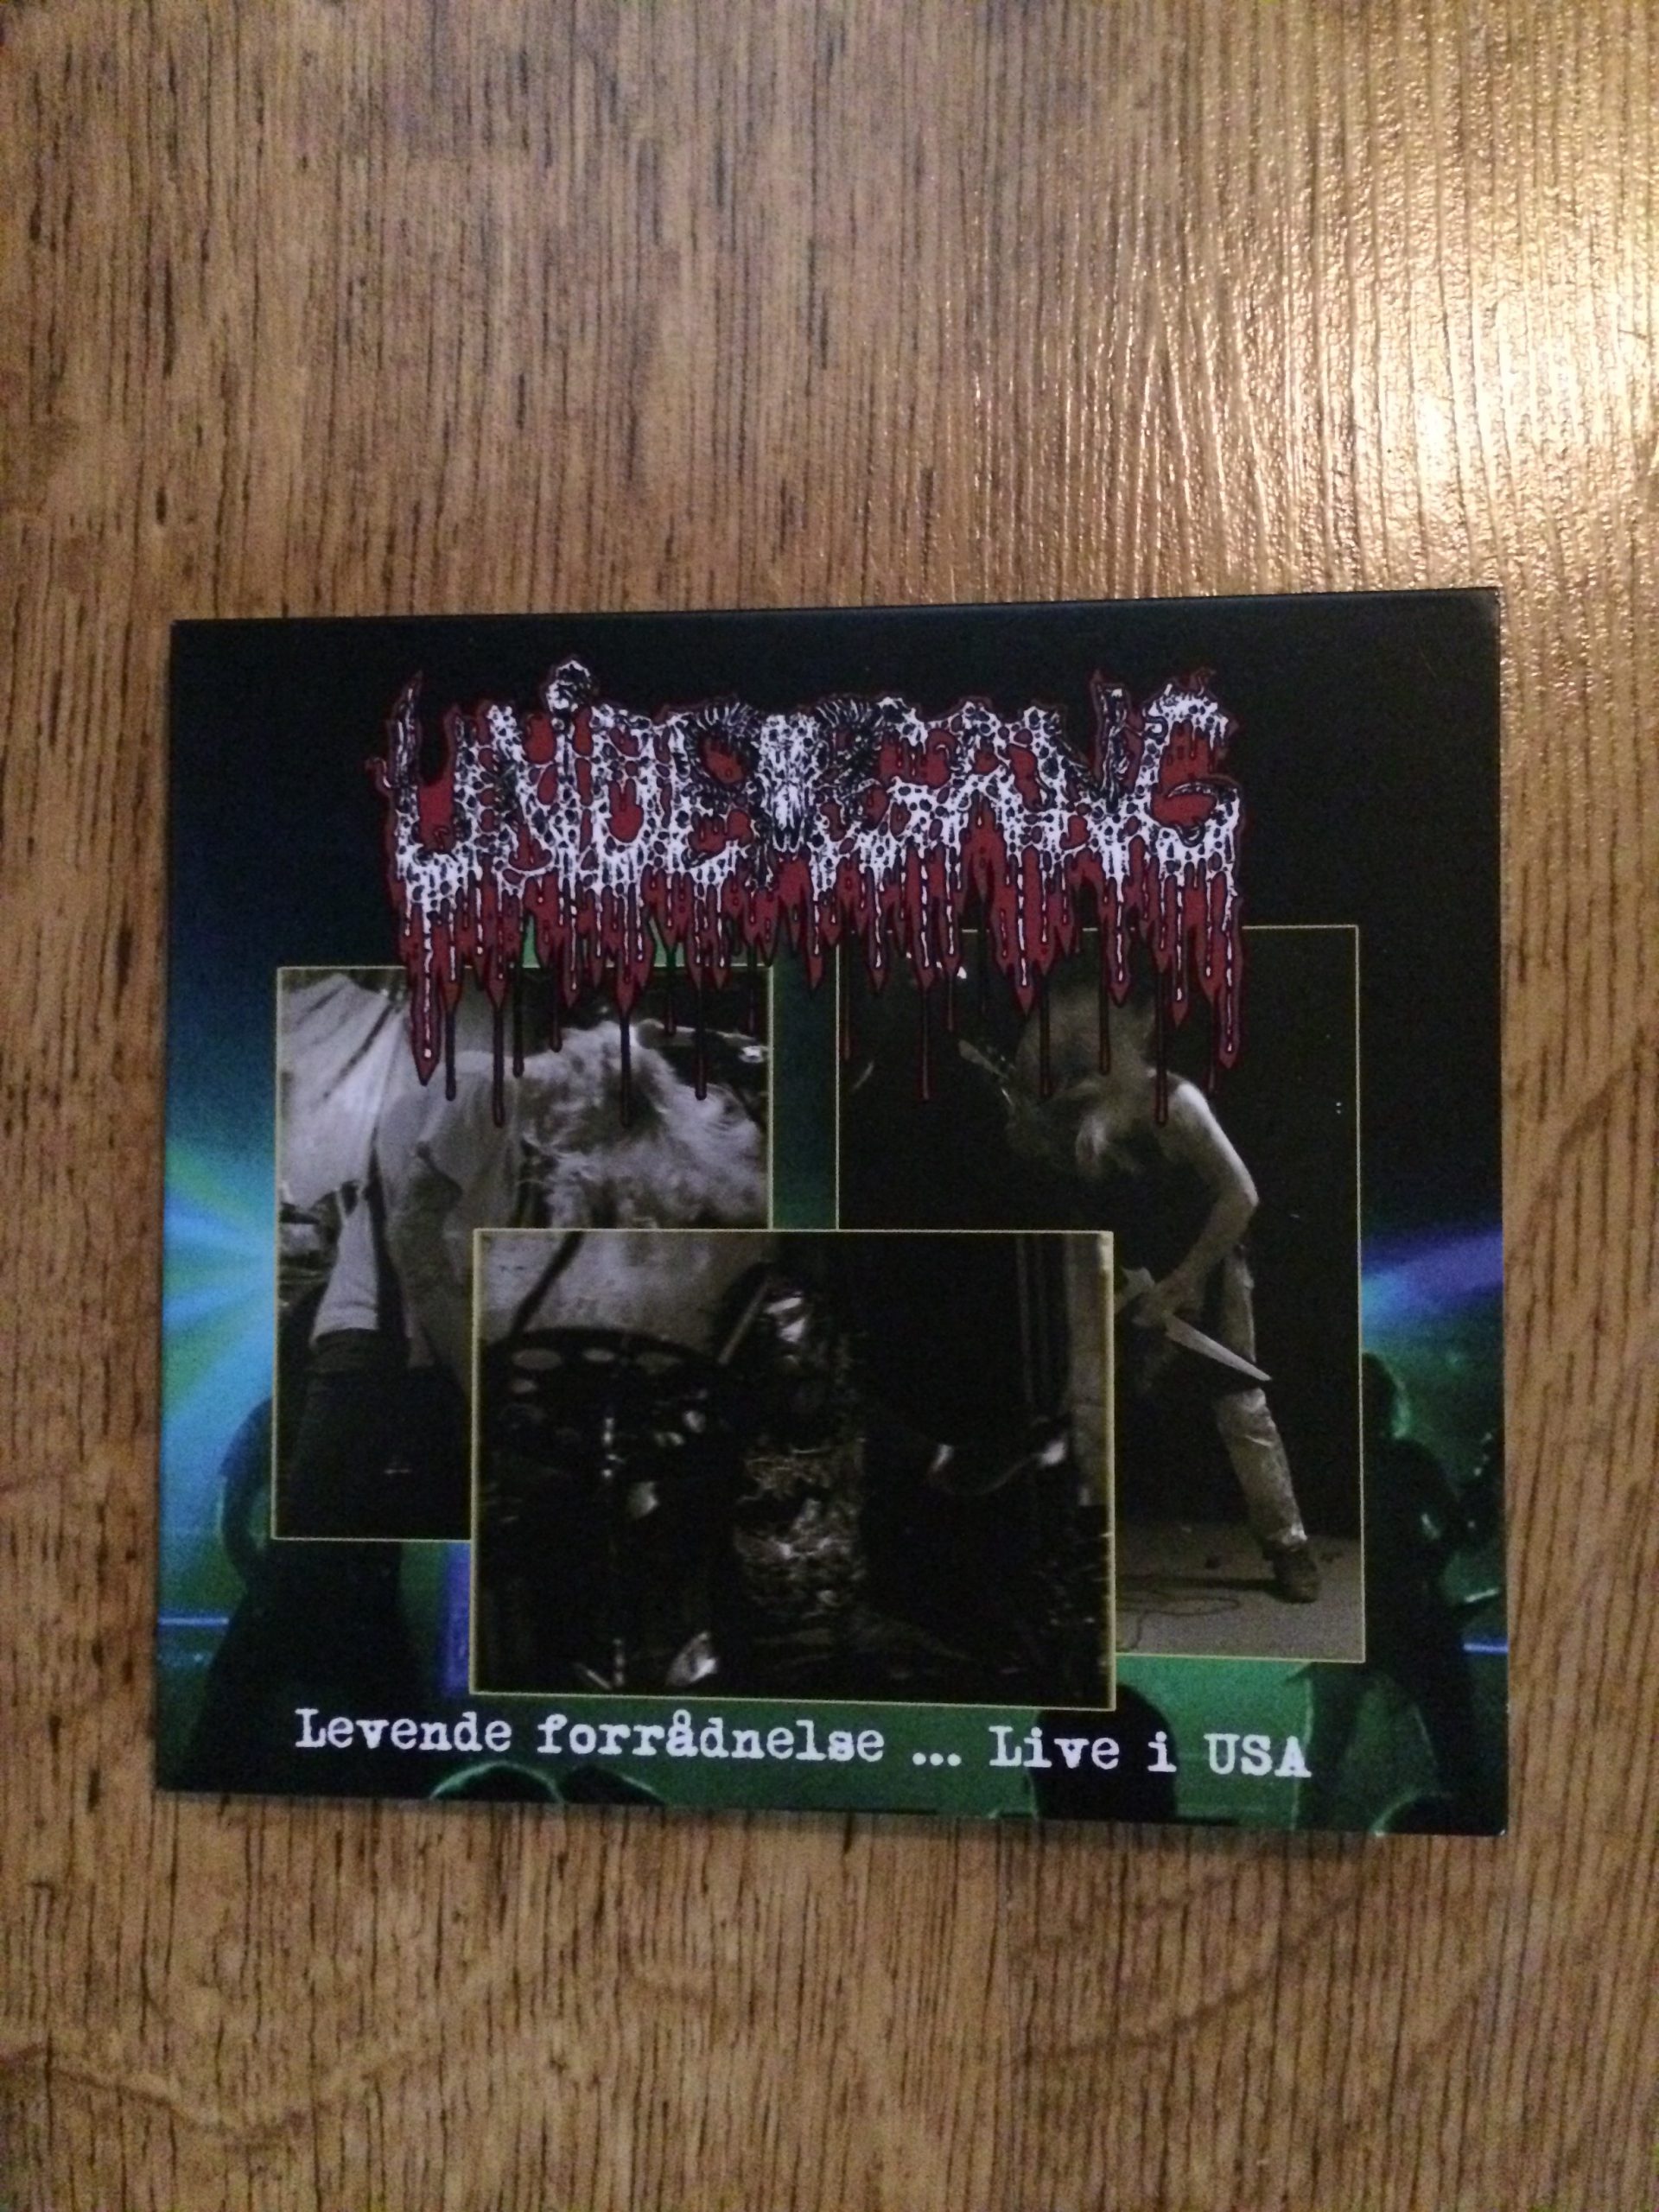 Photo of the Undergang - "Levende forrådnelse ... Live i USA" digipack CD